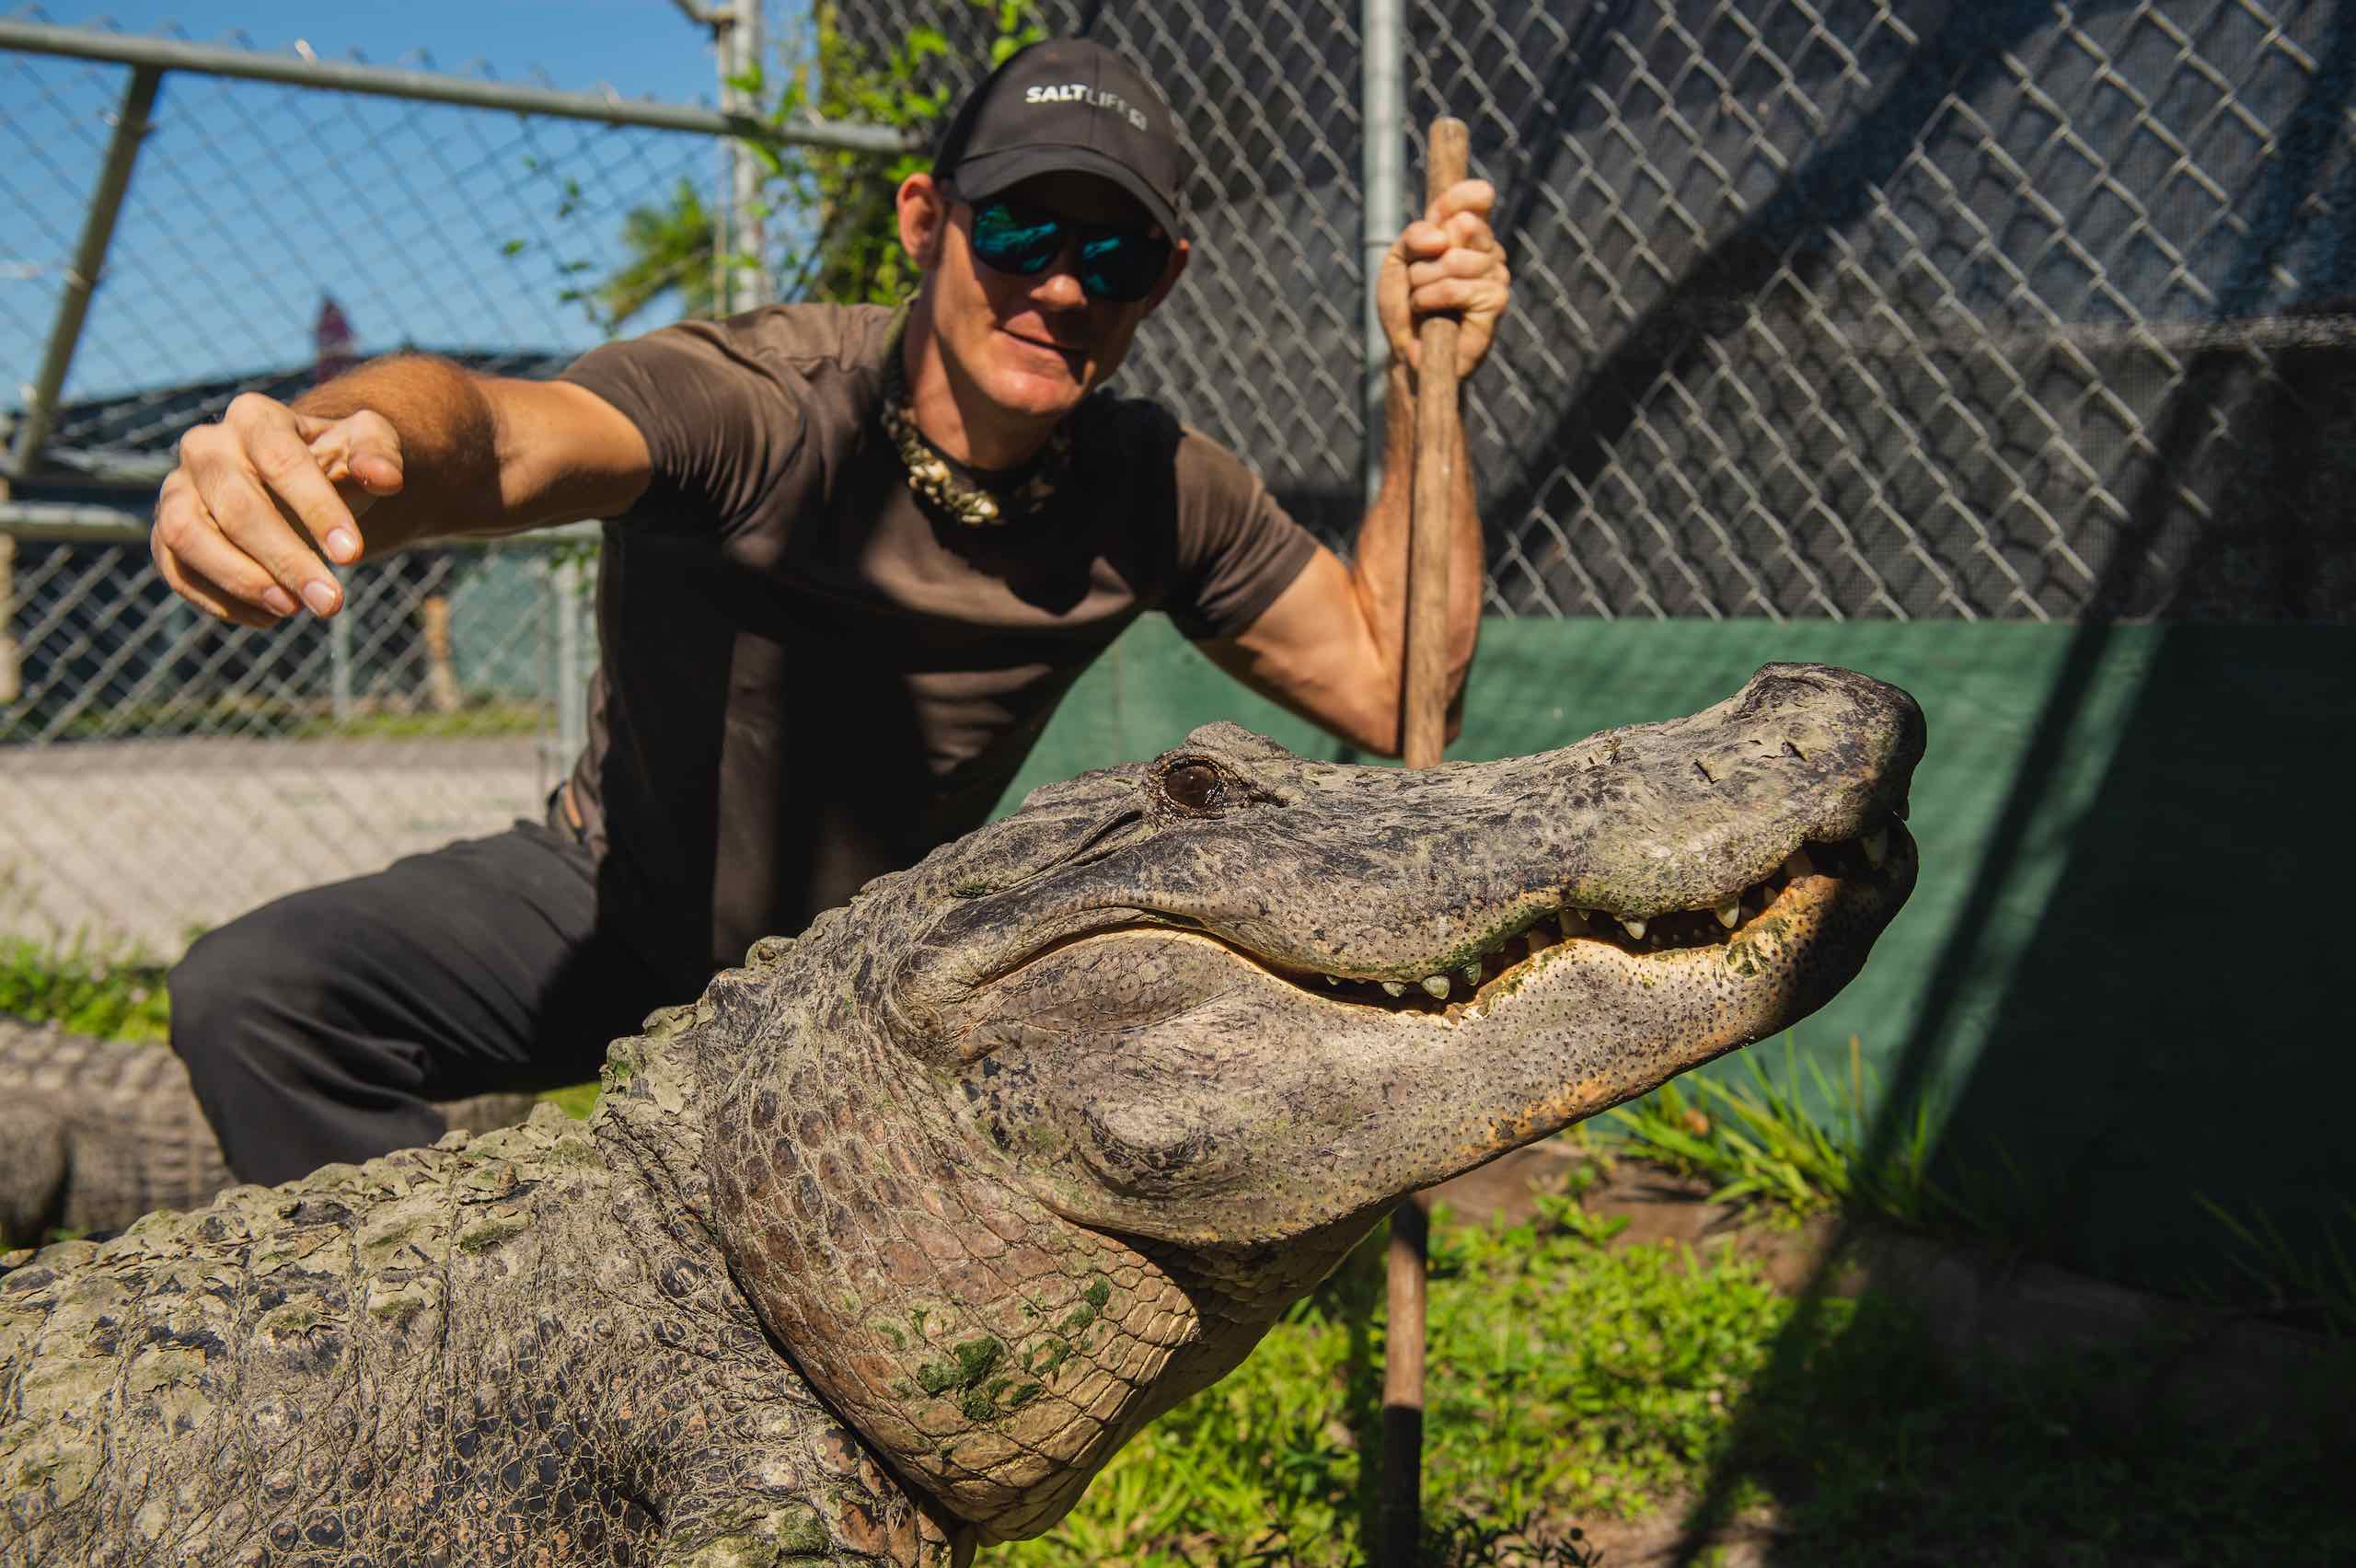 Everglades Holiday Park Man wearing black cap holding stick posing behind an alligator